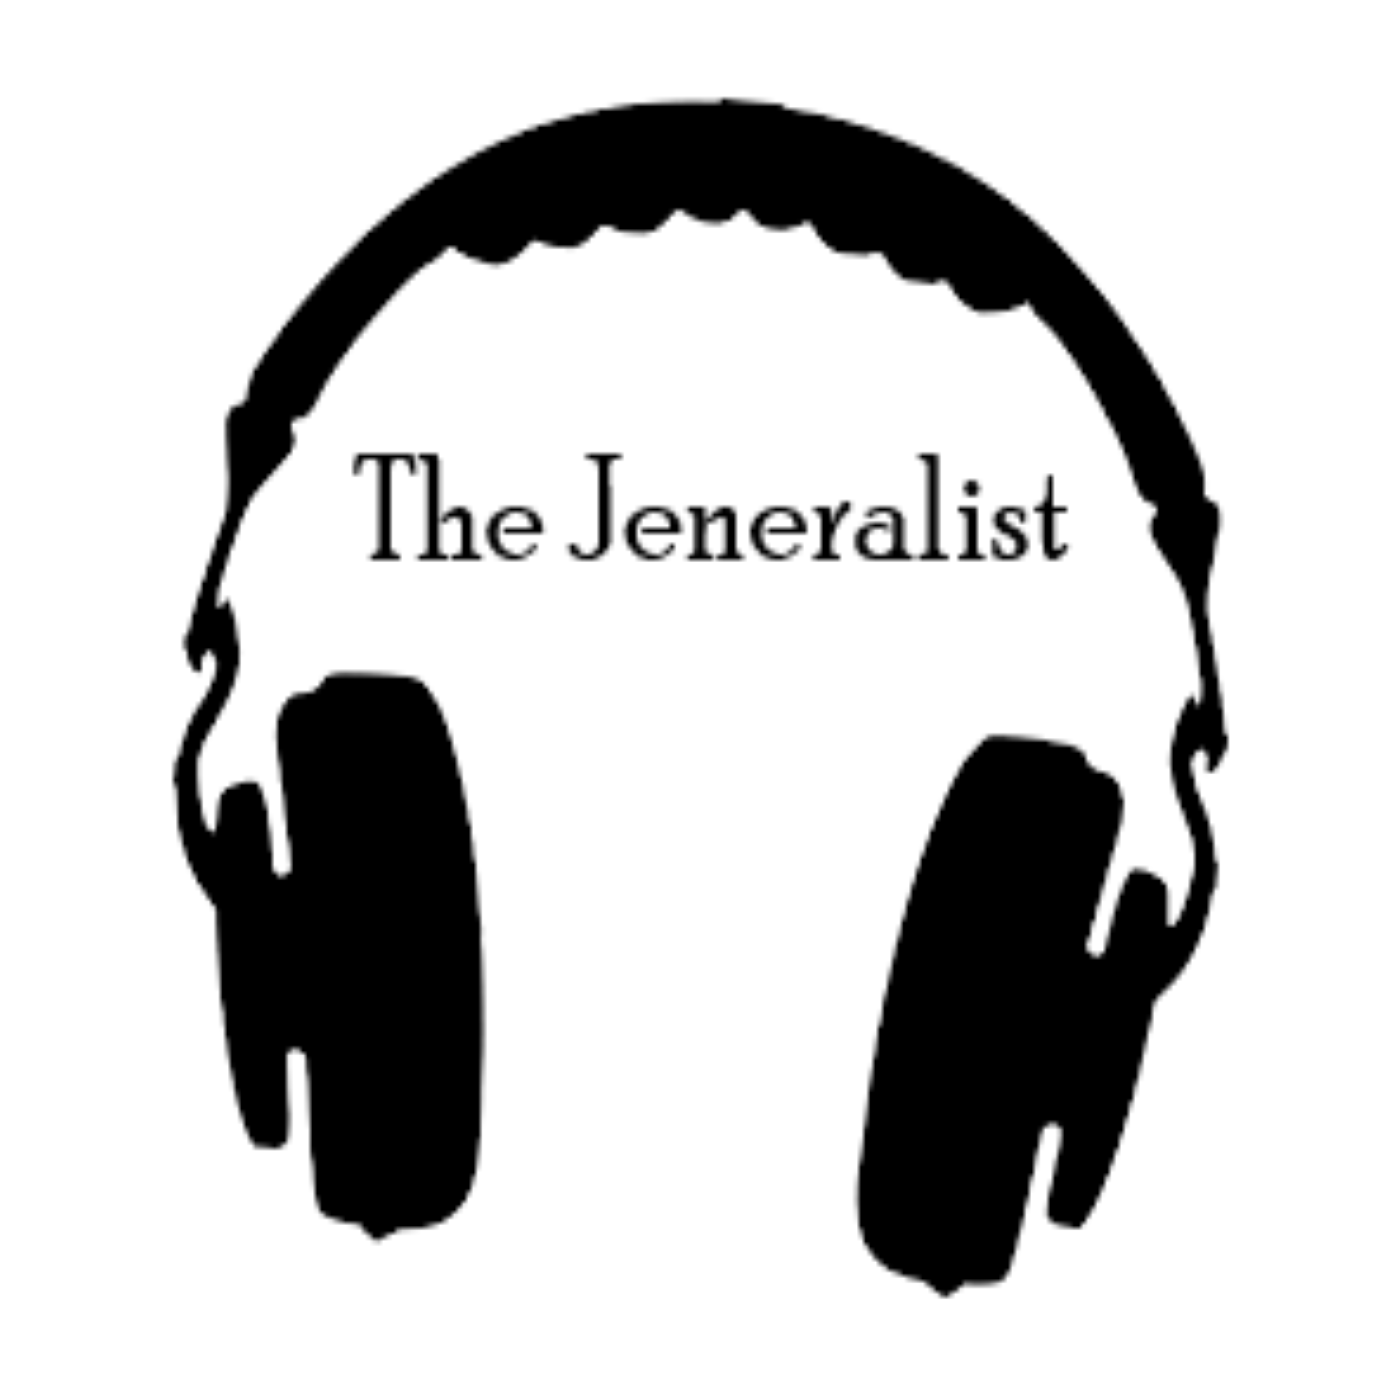 The Jeneralist